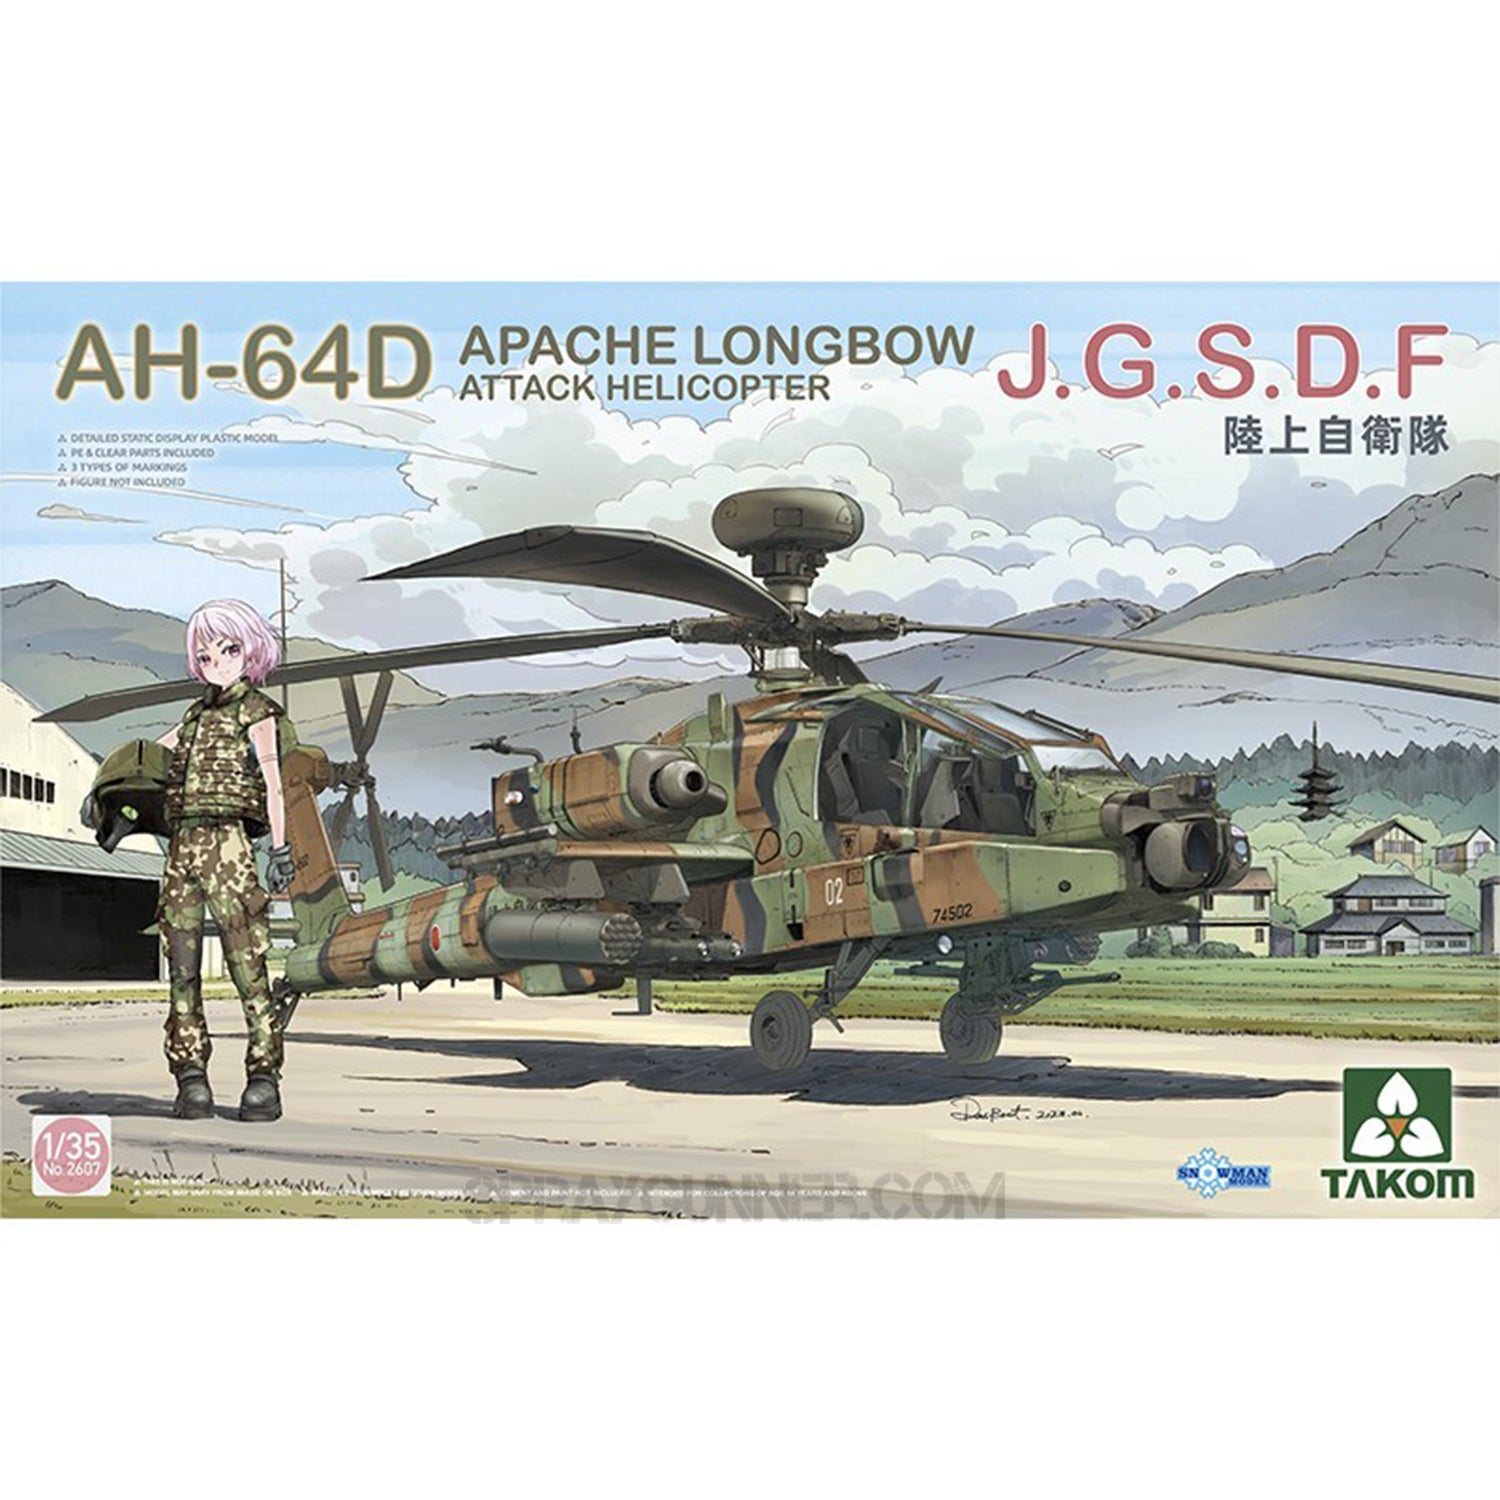 TAKOM 1/35 AH-64D Apache Longbow Attack Helicopter J.G.S.D.F TAKOM